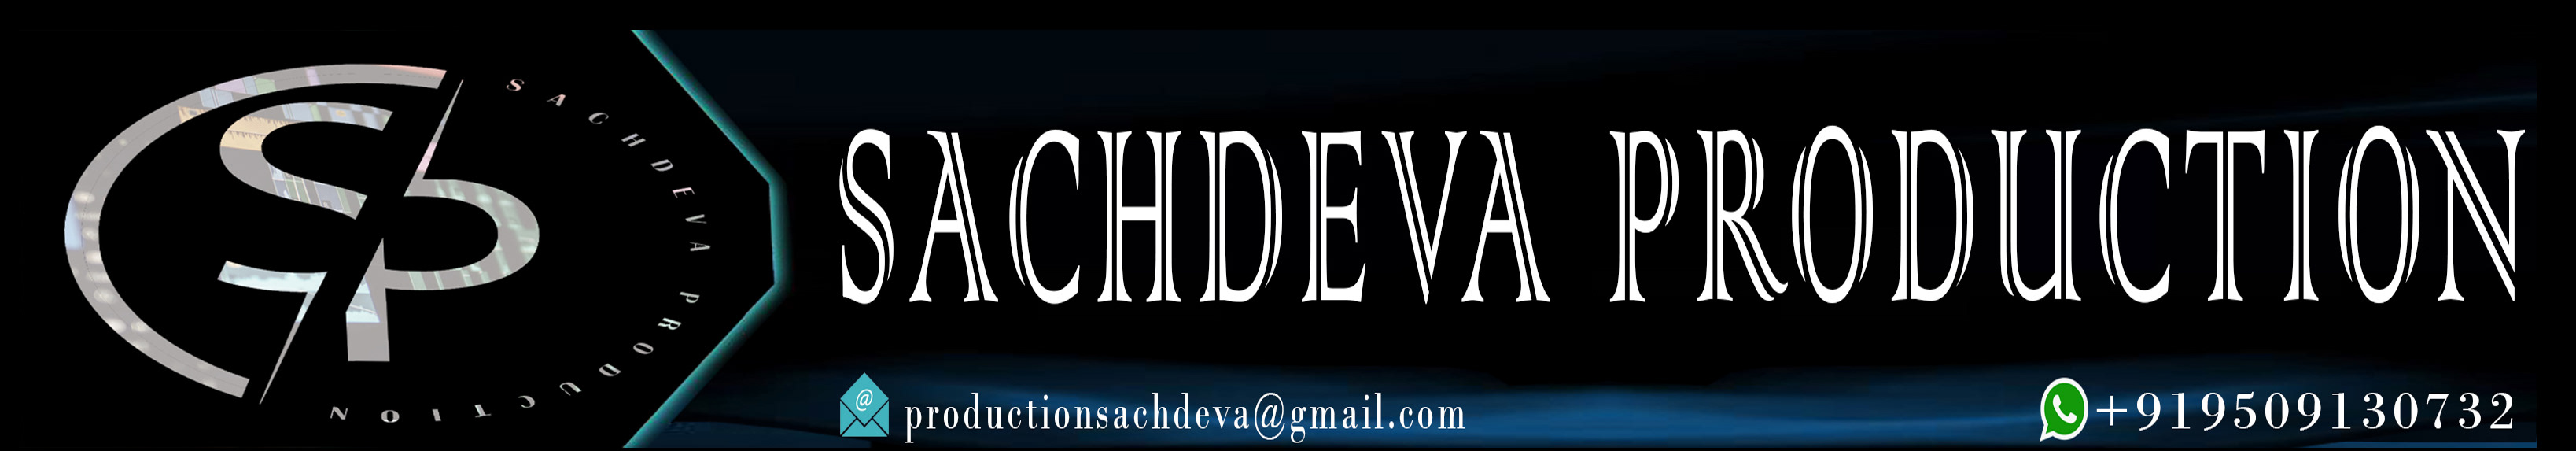 Banner de perfil de Sachdeva Production